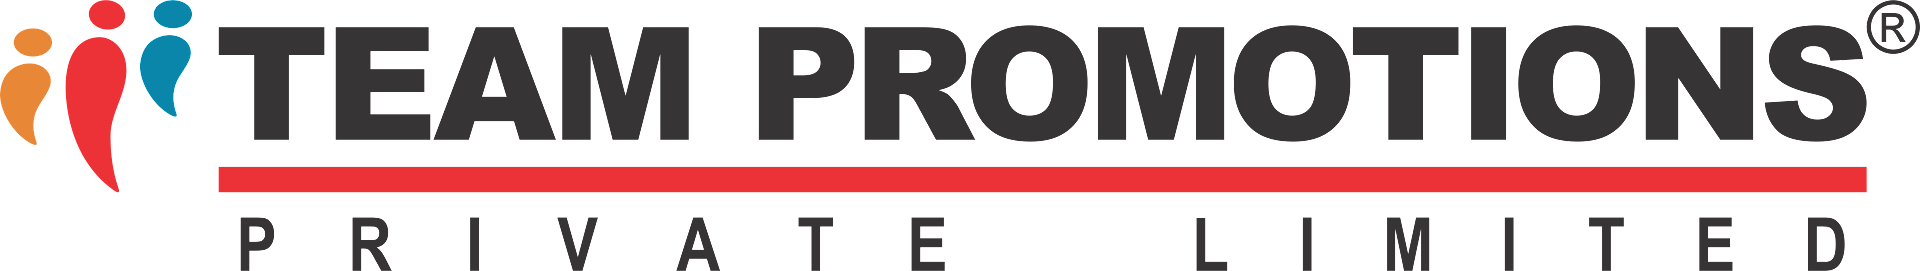 Team-promotions-logo